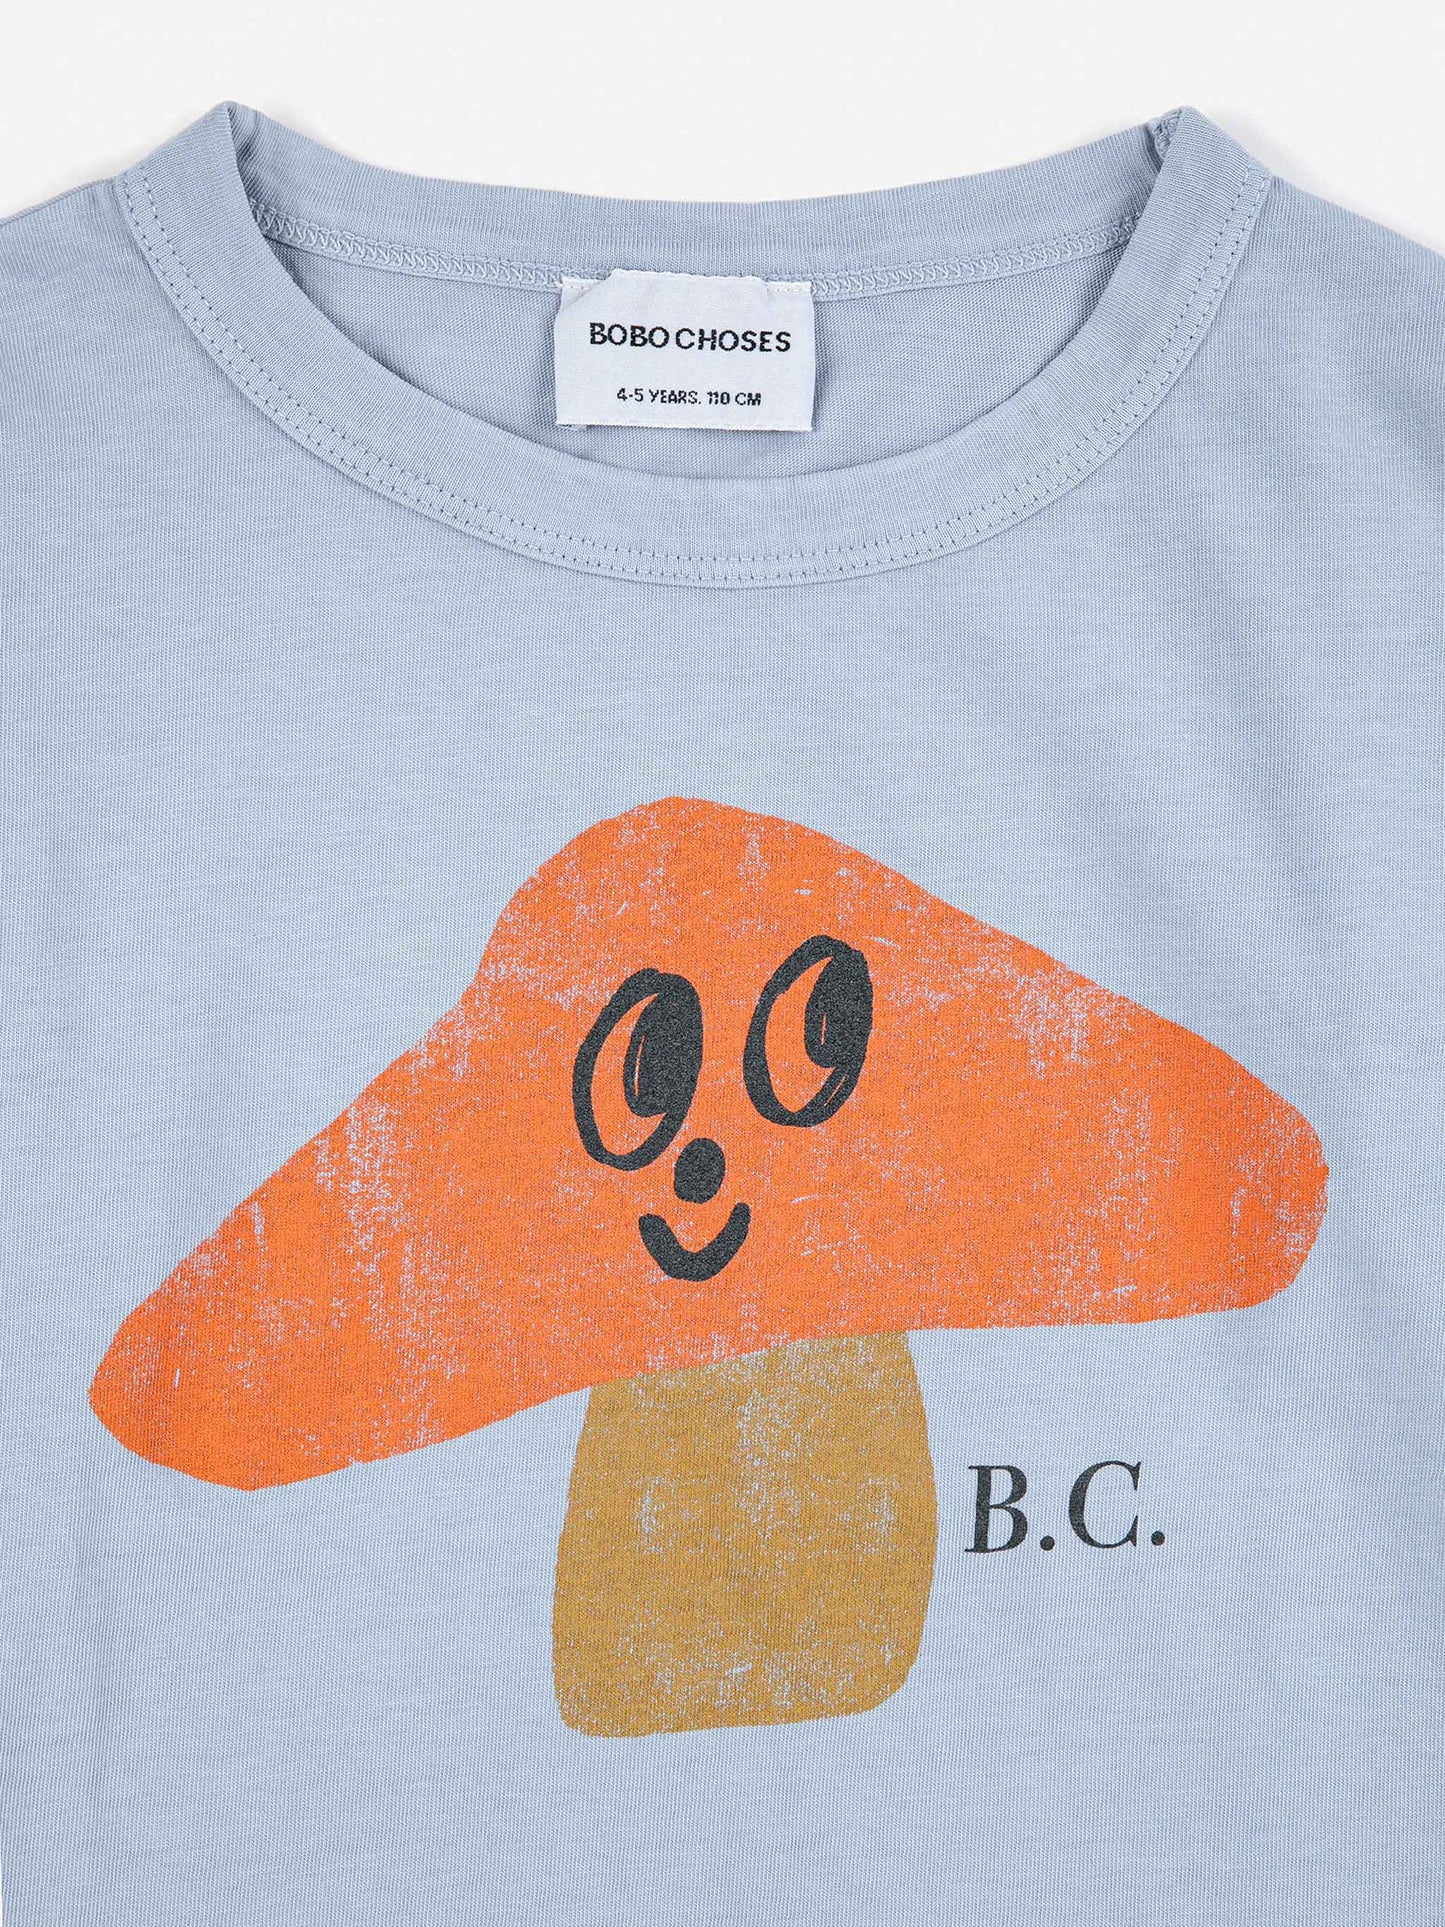 Mr. Mushroom long sleeve T-shirt